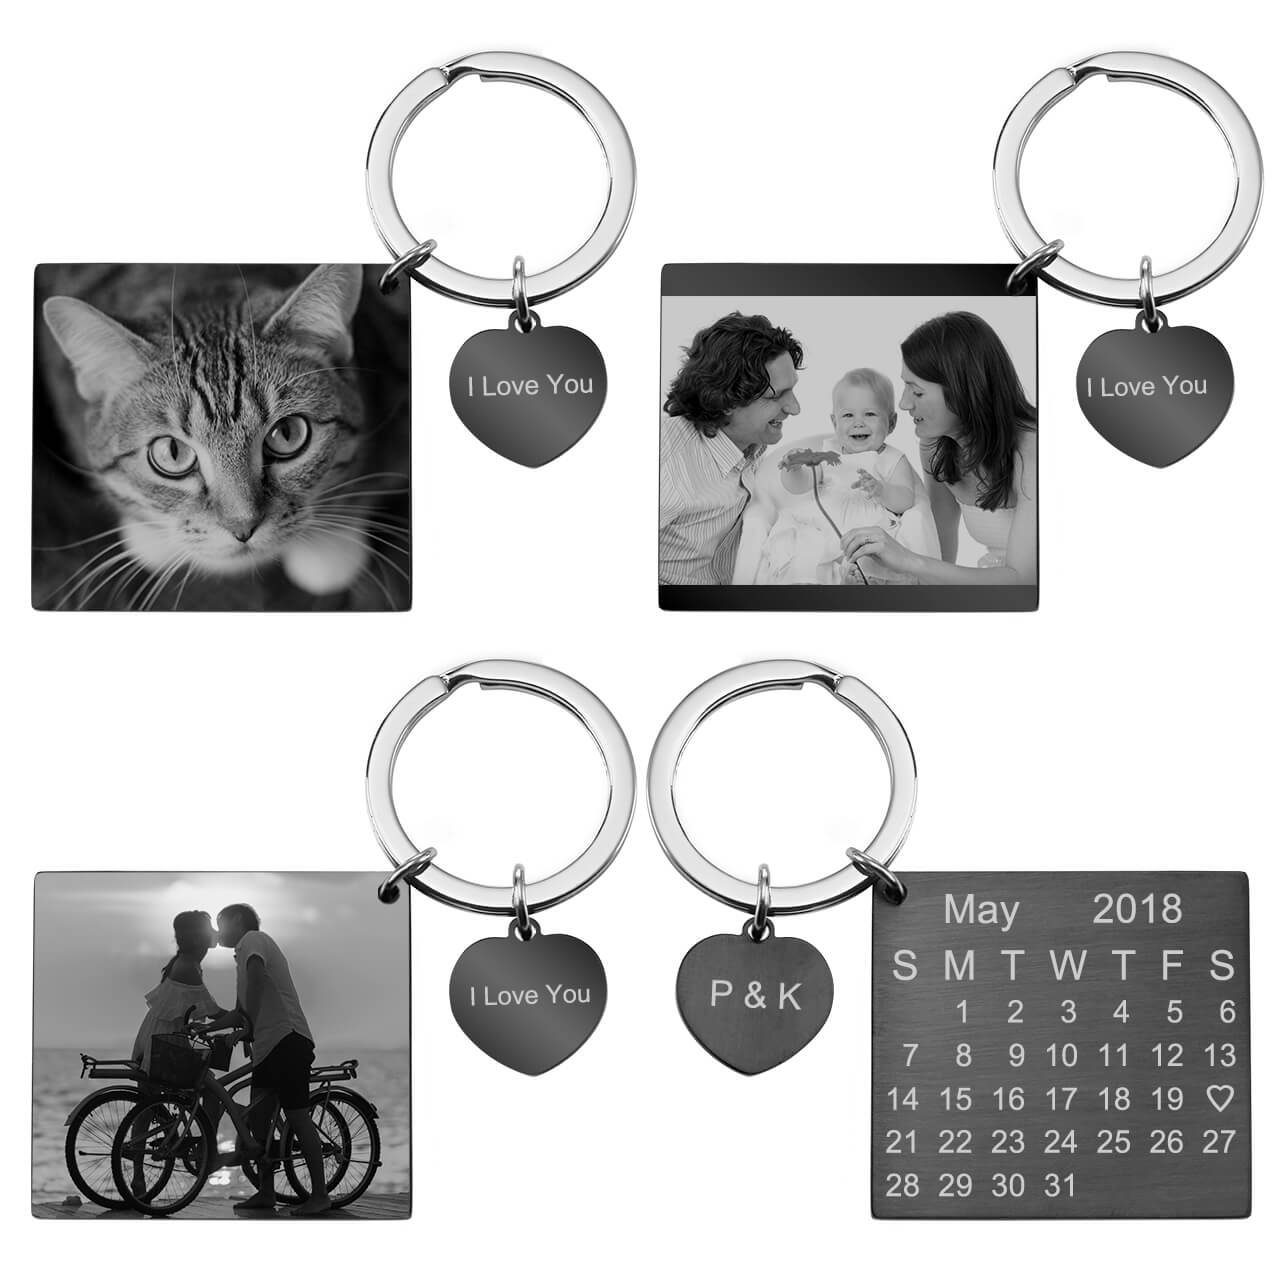 Jovivi personalized custom calendar photo tag keychain set for women, jnf002705